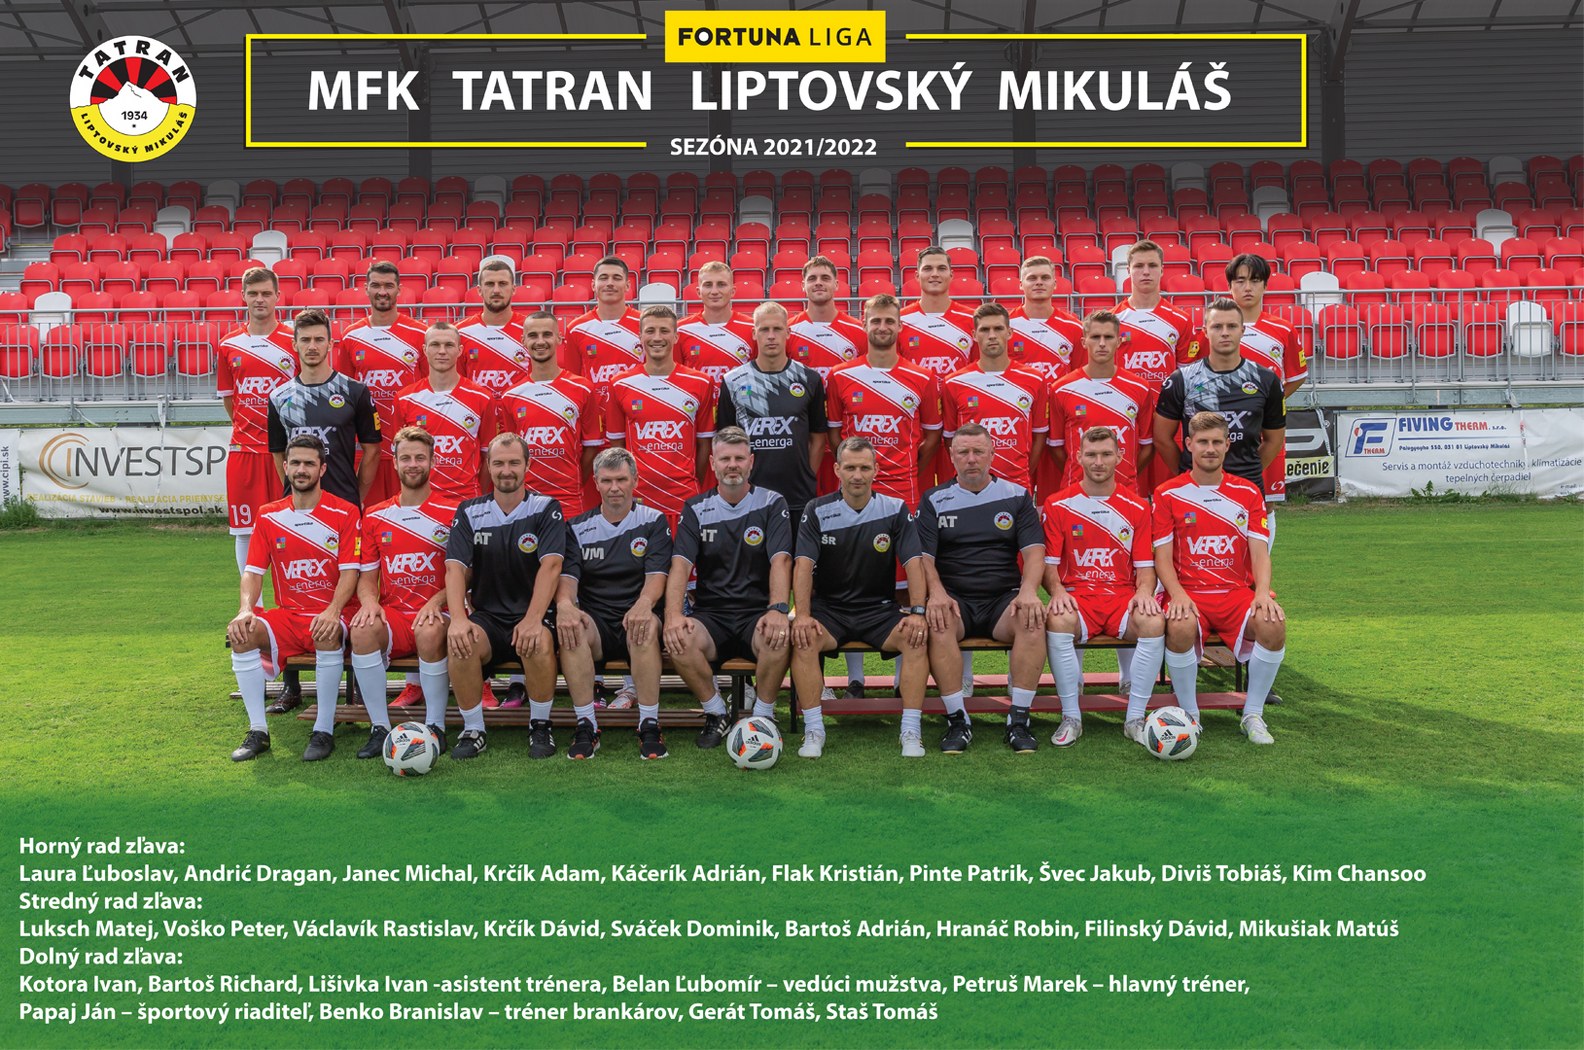 MFK Tatran Liptovský Mikuláš 2020/2021